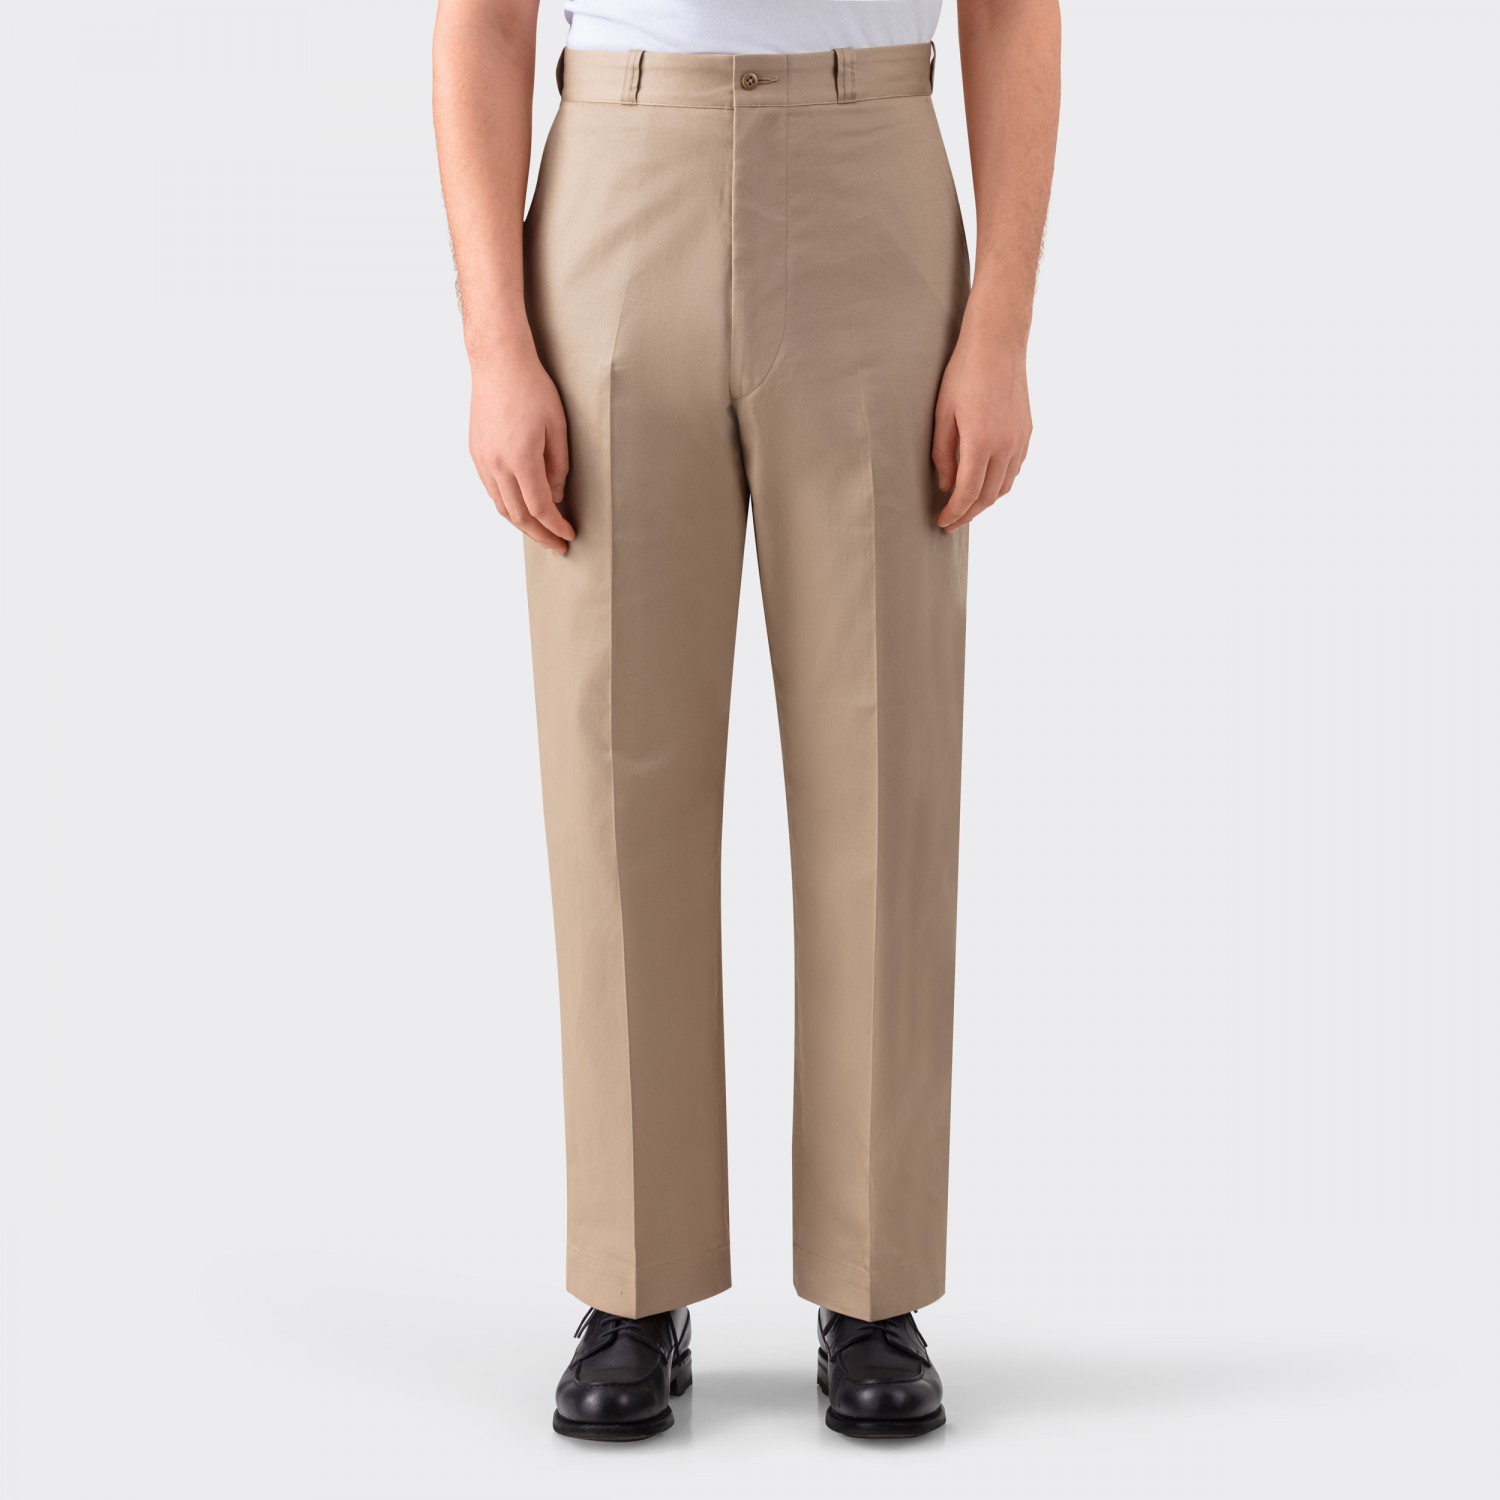 Yankshire : 1963 Cotton Twill Trousers : Beige